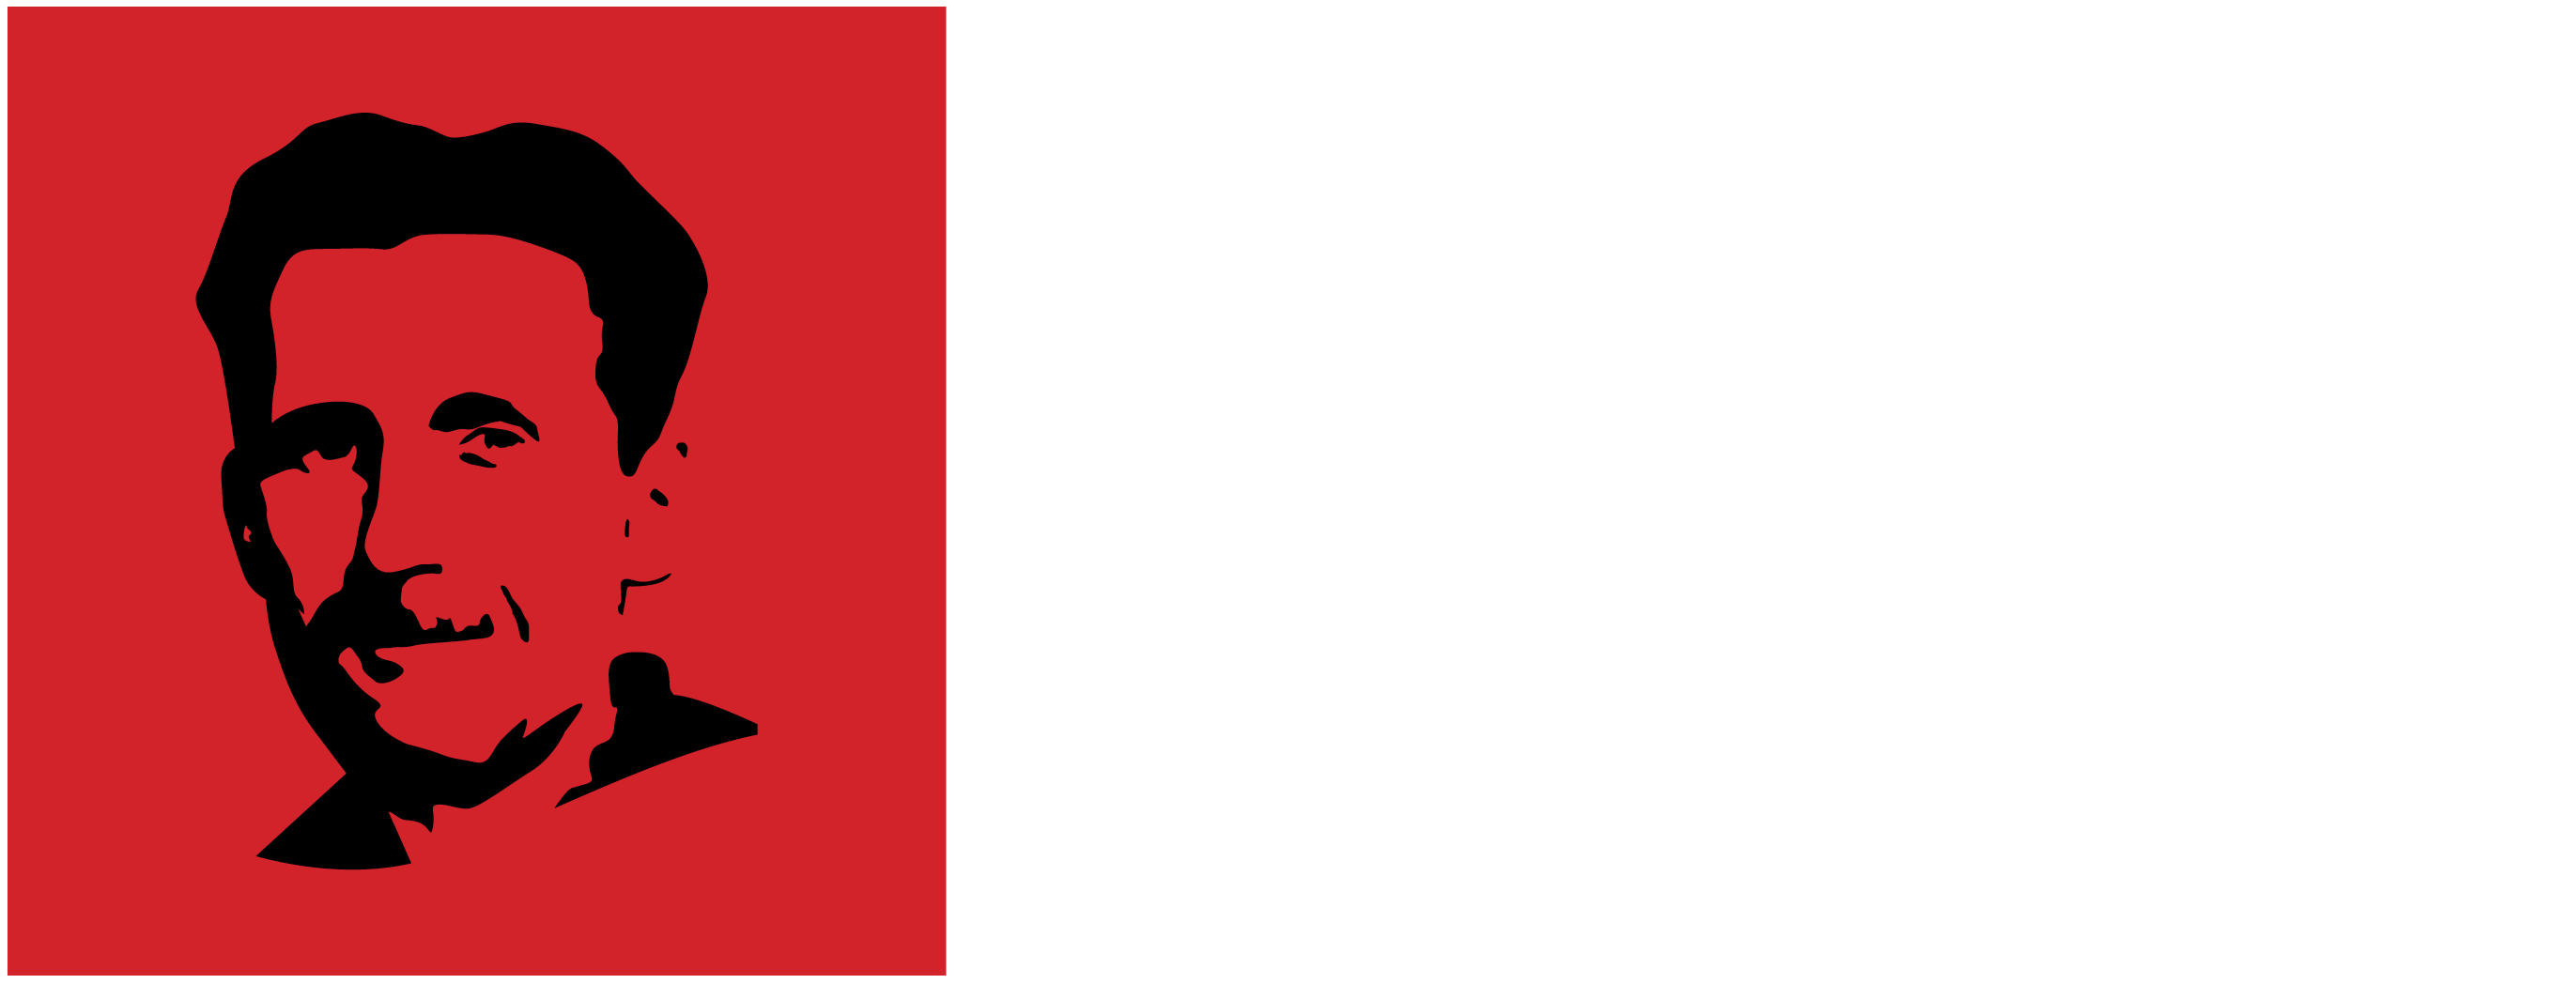 The Orwell Foundation